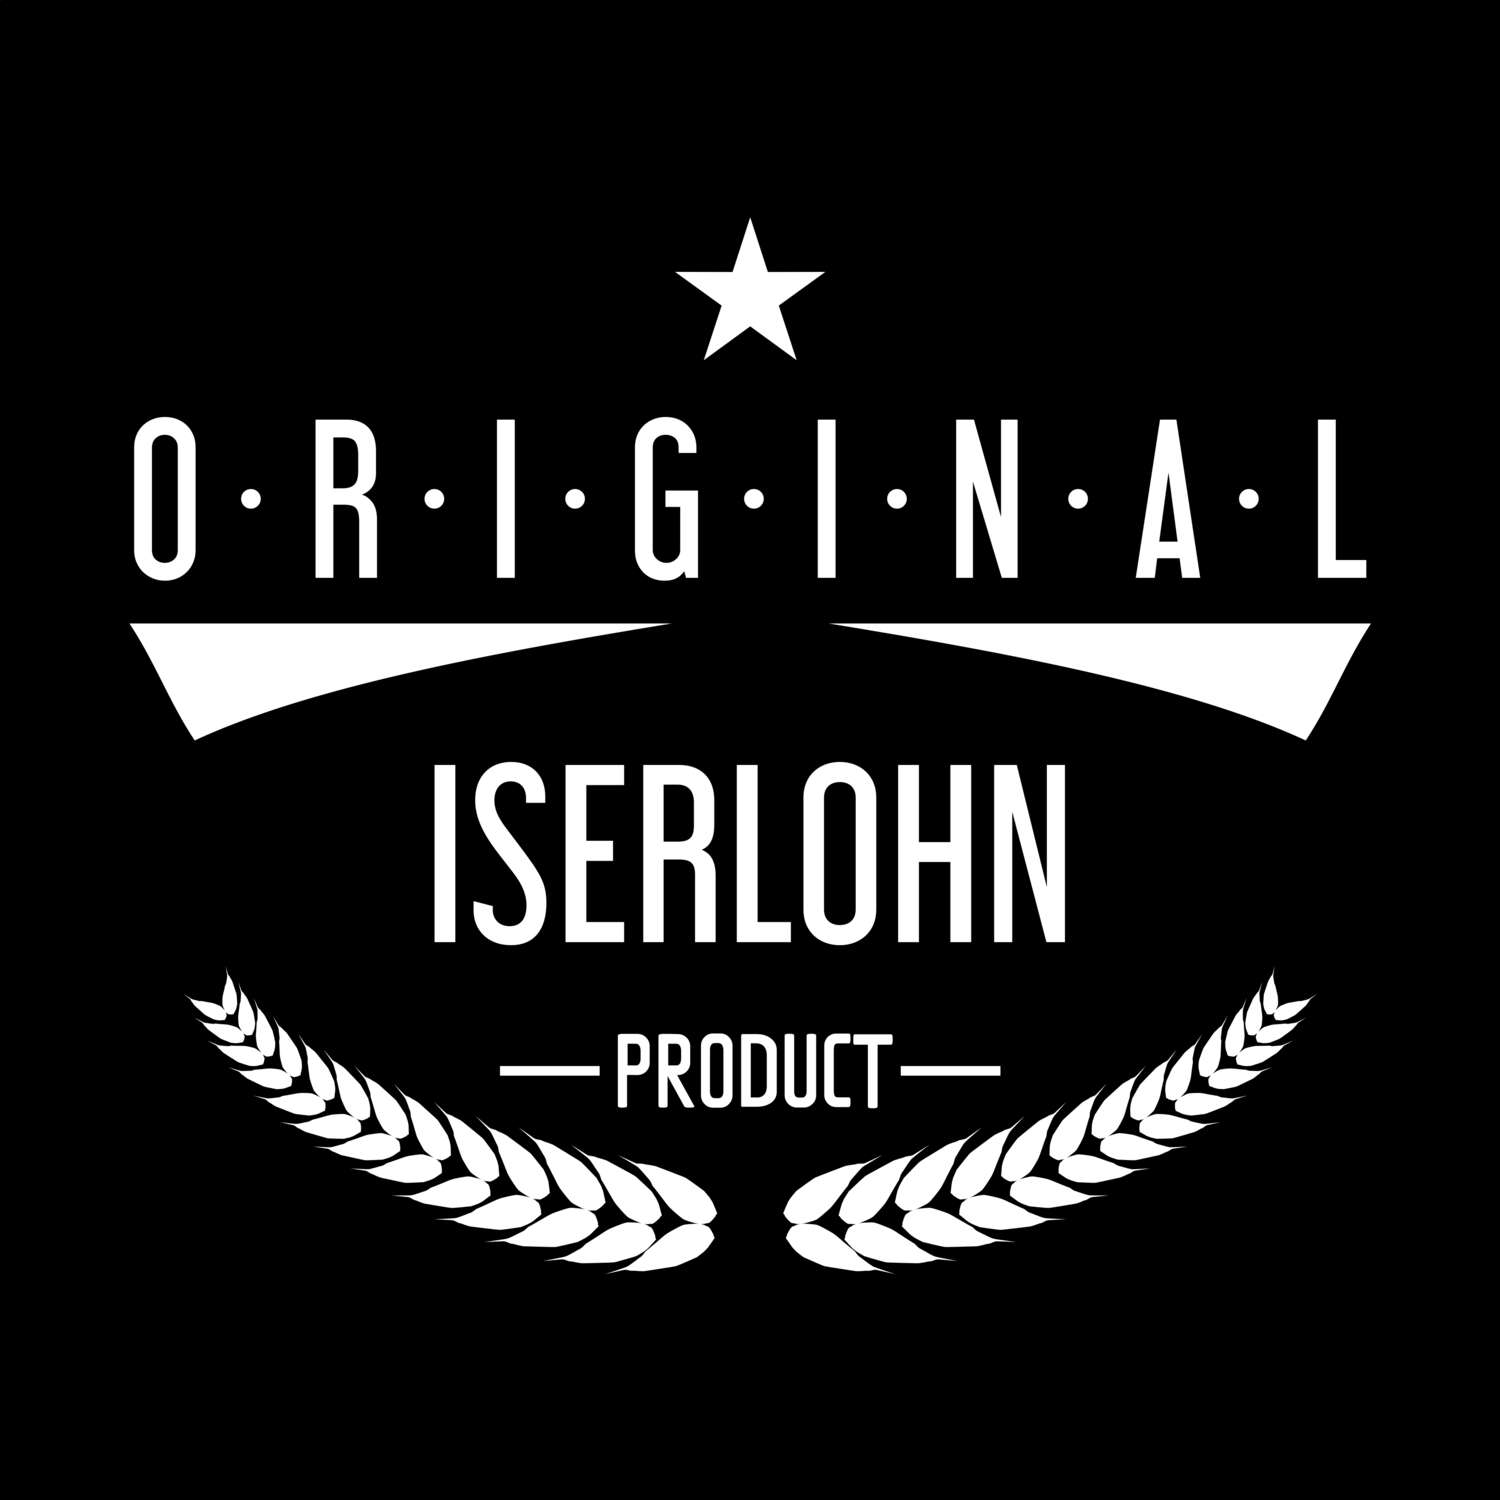 Iserlohn T-Shirt »Original Product«